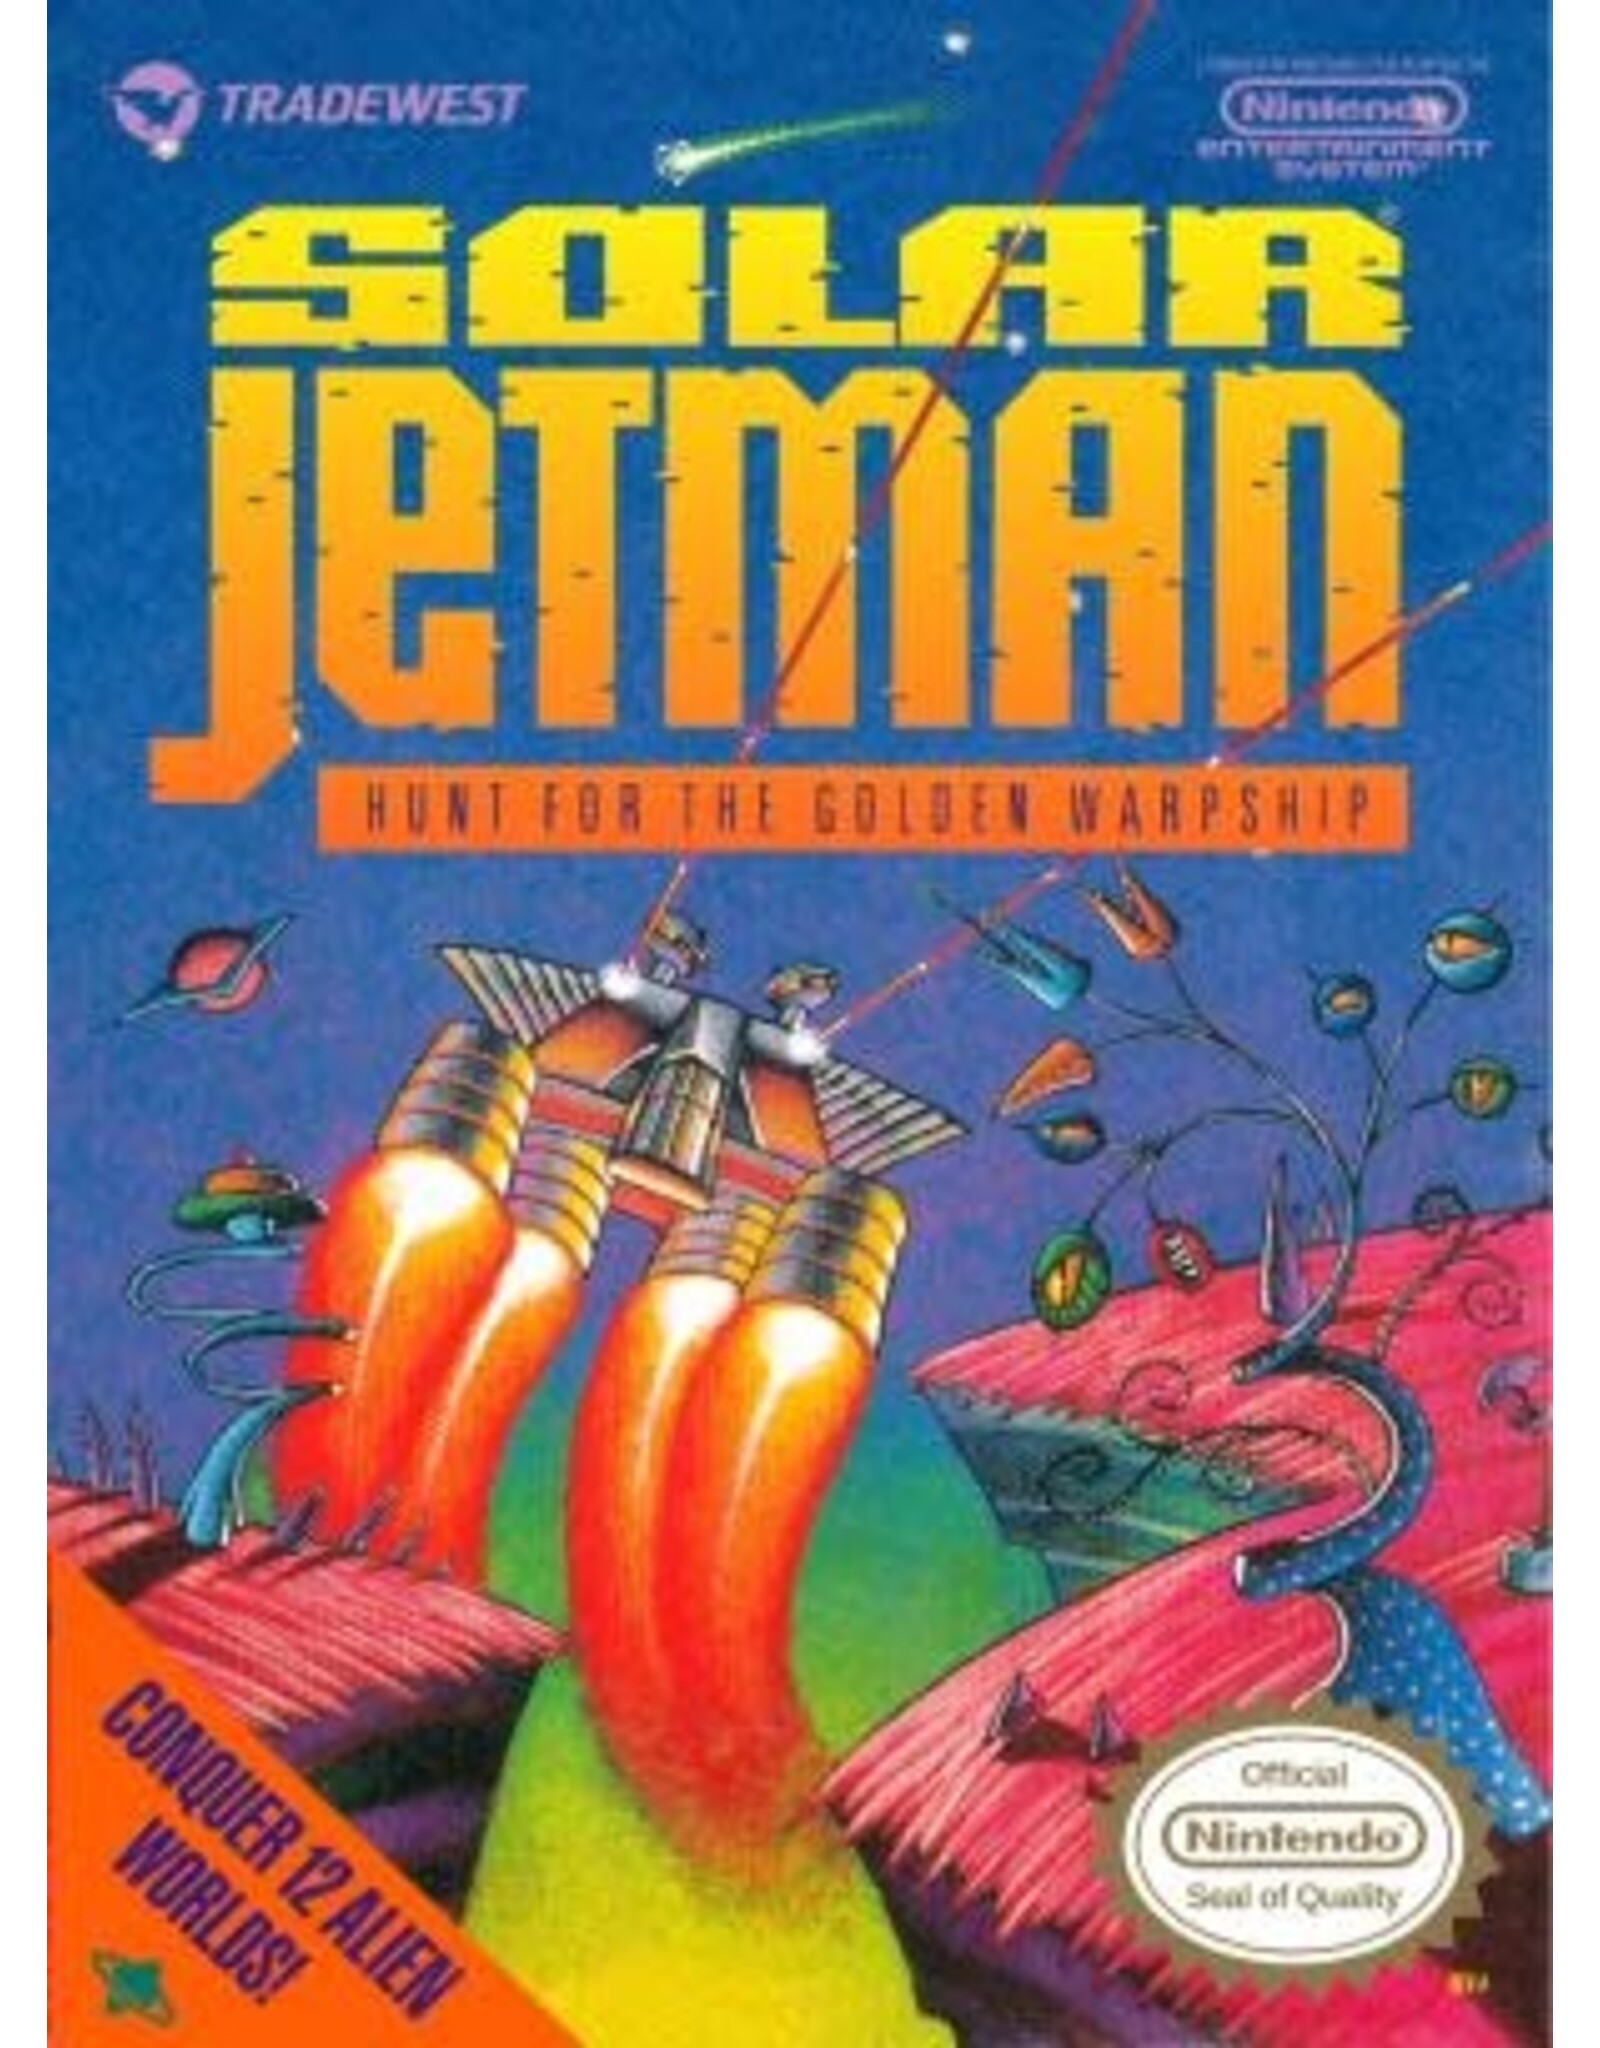 NES Solar Jetman (Cart Only, Damaged Cart)